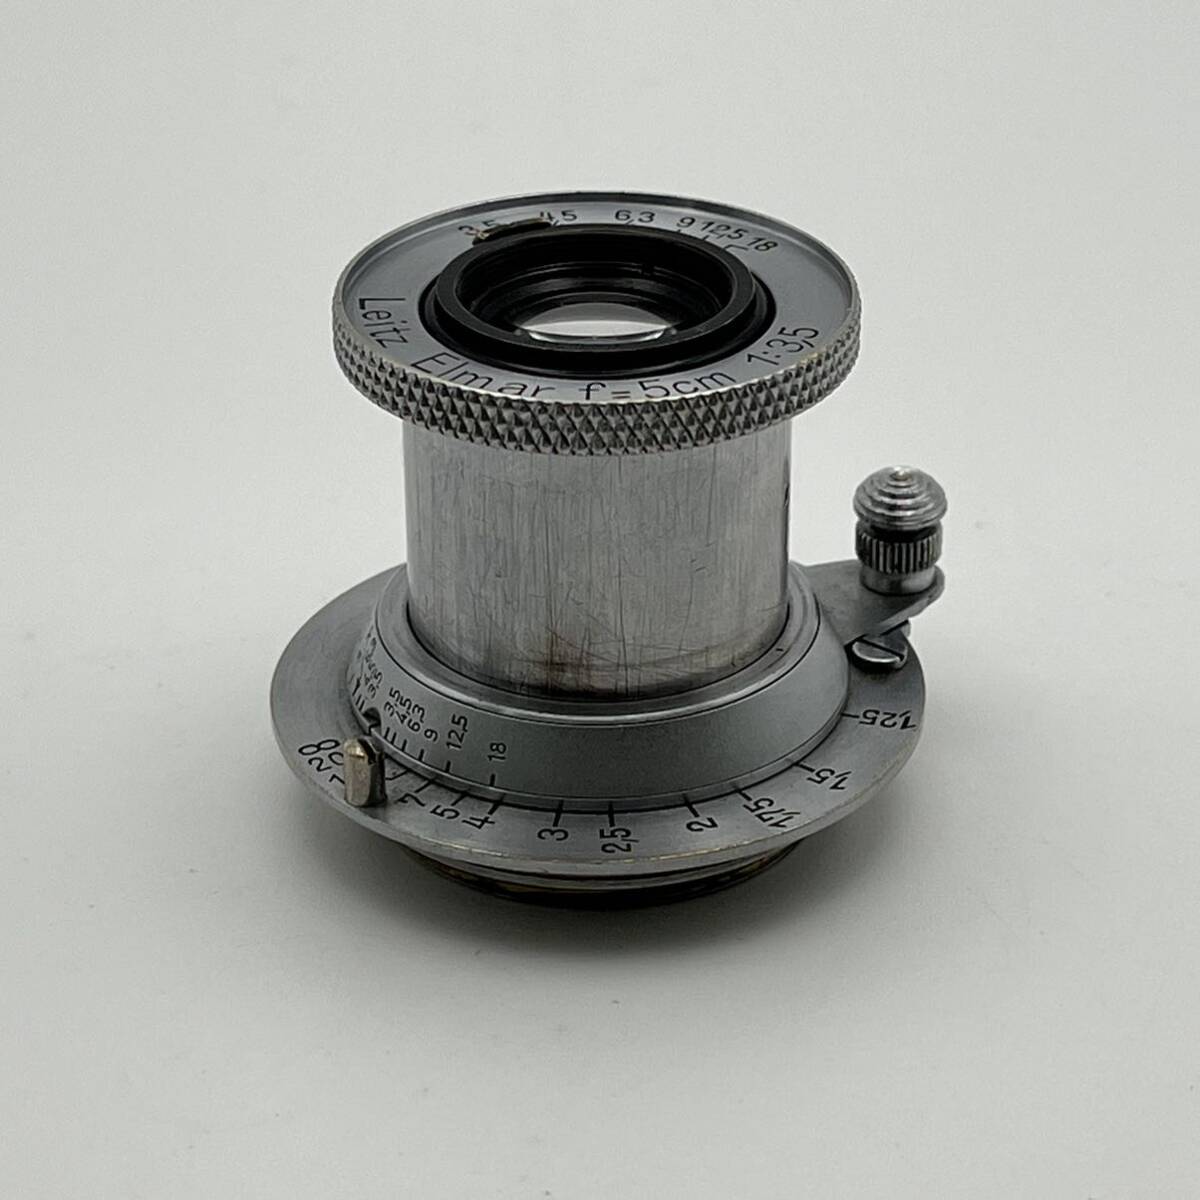 Leitz Elmar 5cm f3.5 ライツ エルマー 50mm Ernst Leitz Wetzlar Leica ライカ Lマウント 1936年 ドイツ製 沈胴式 標準レンズ_画像1